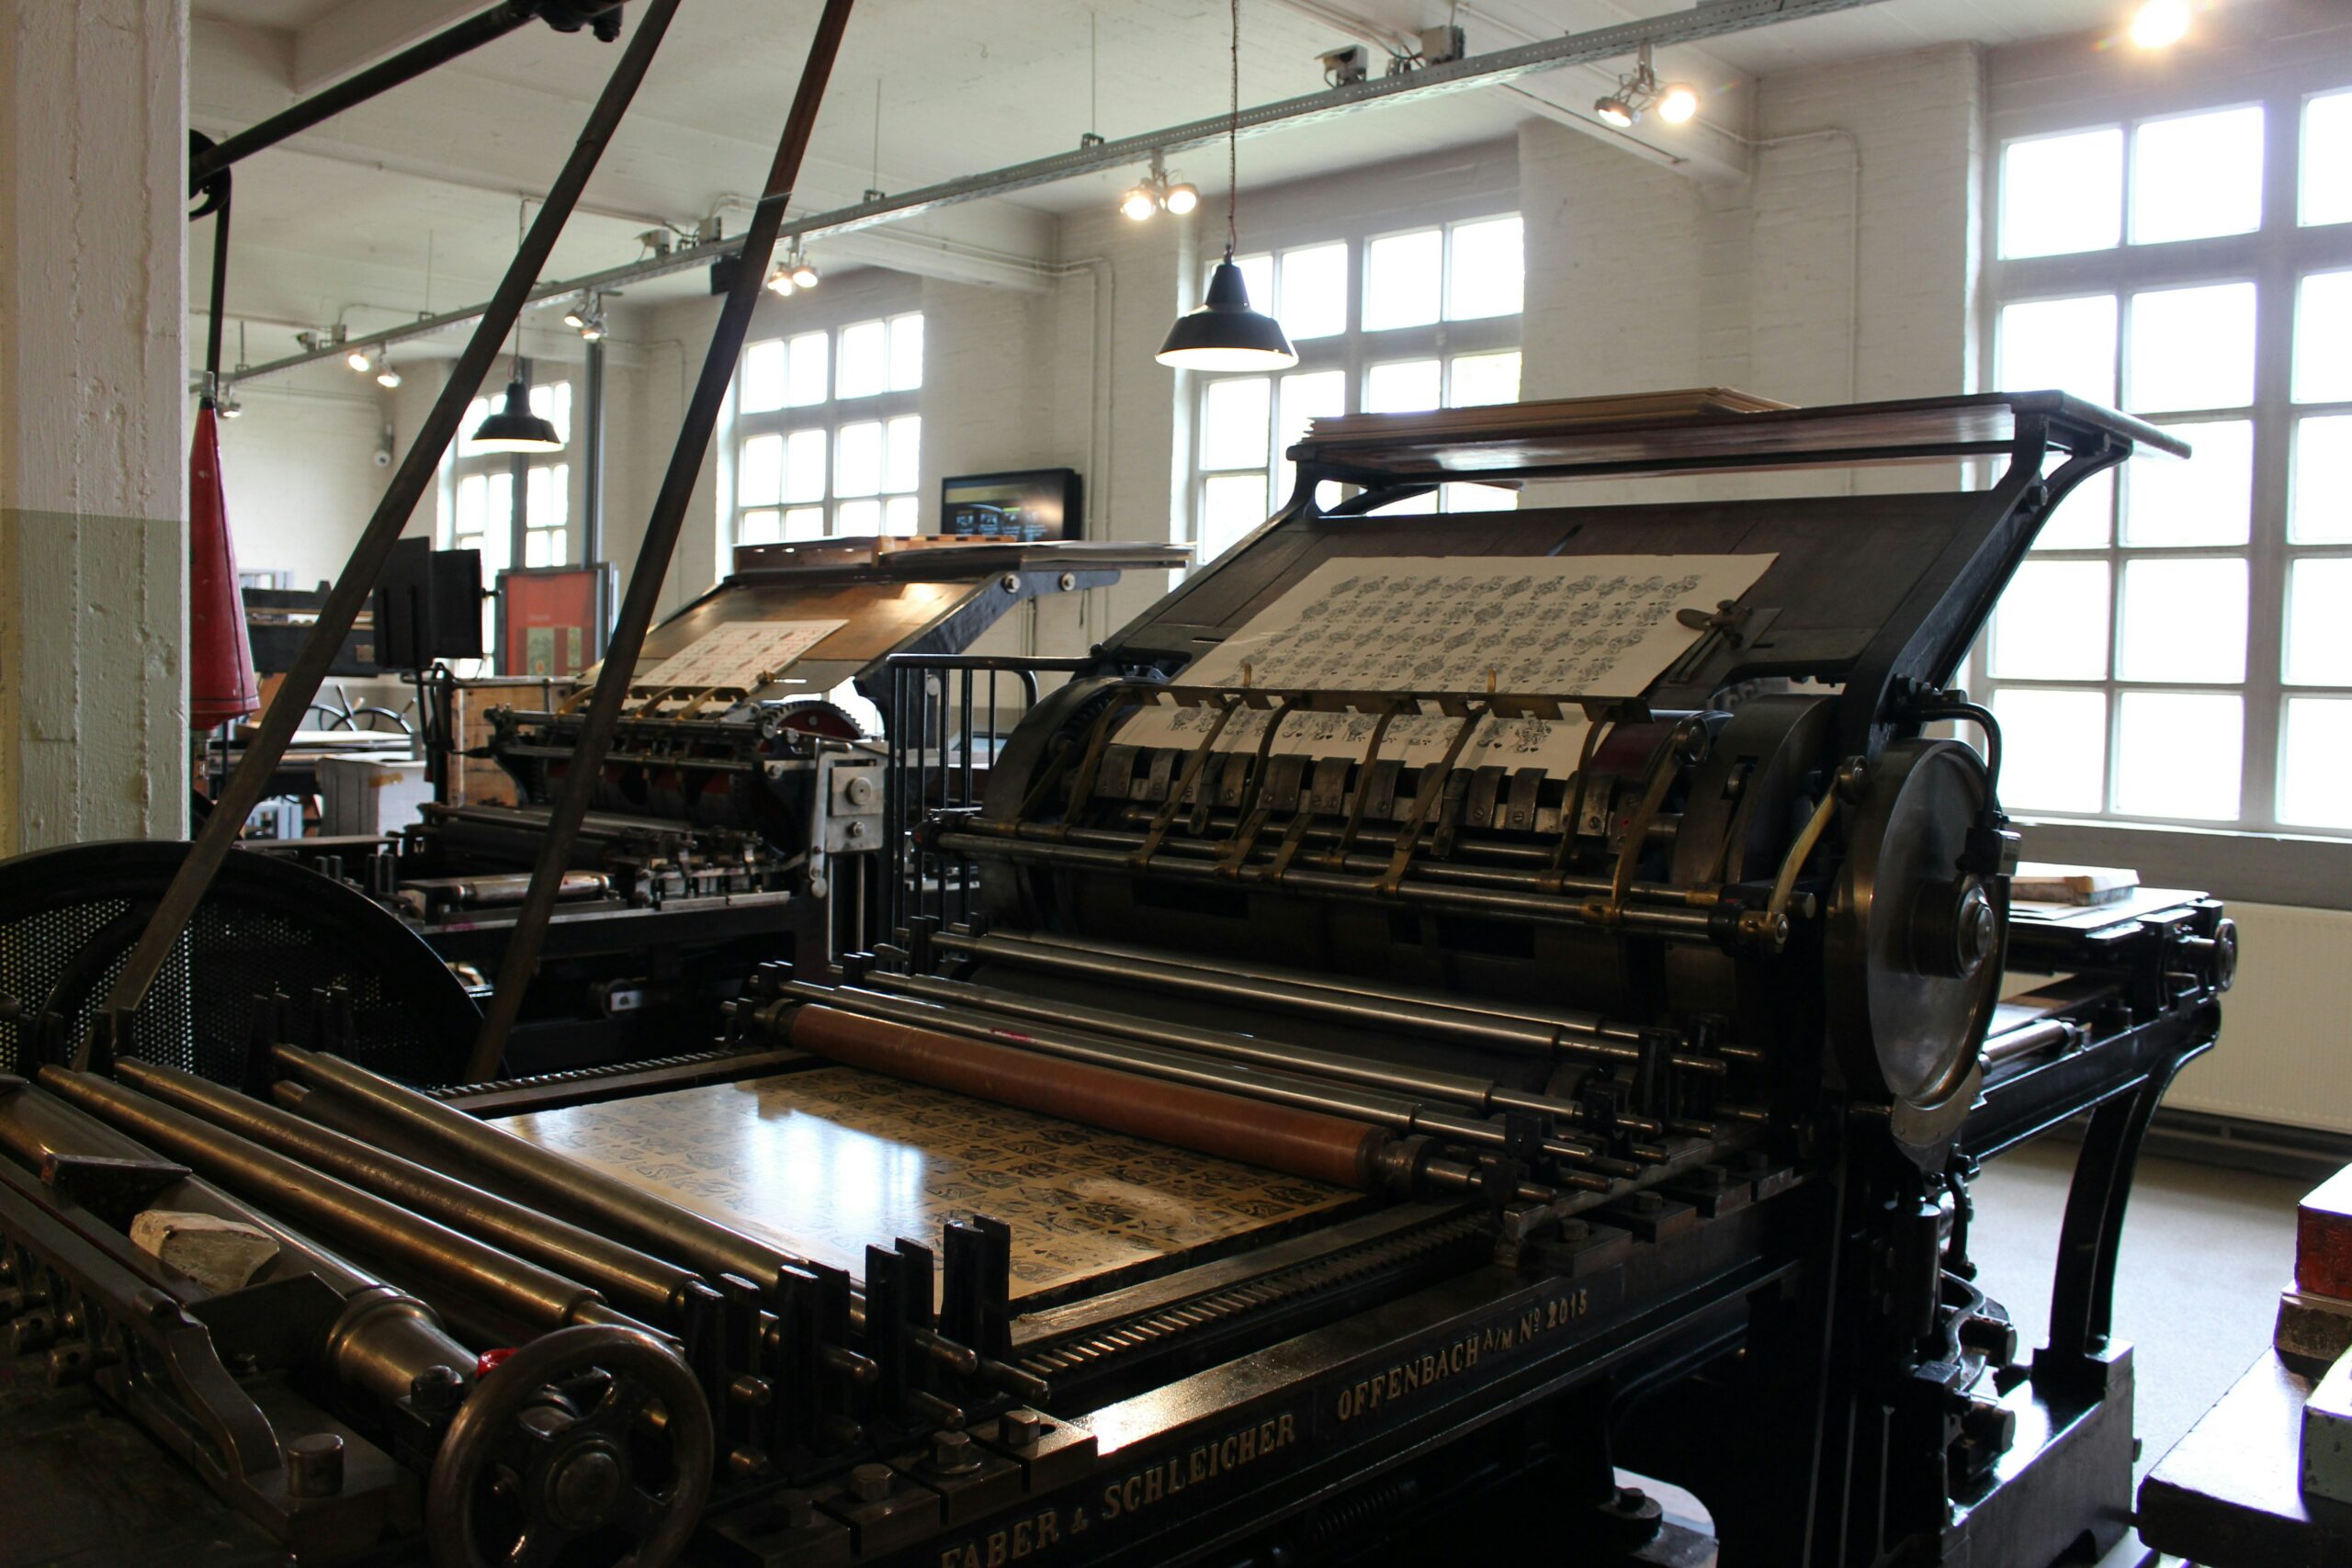 Two printing presses producing material.